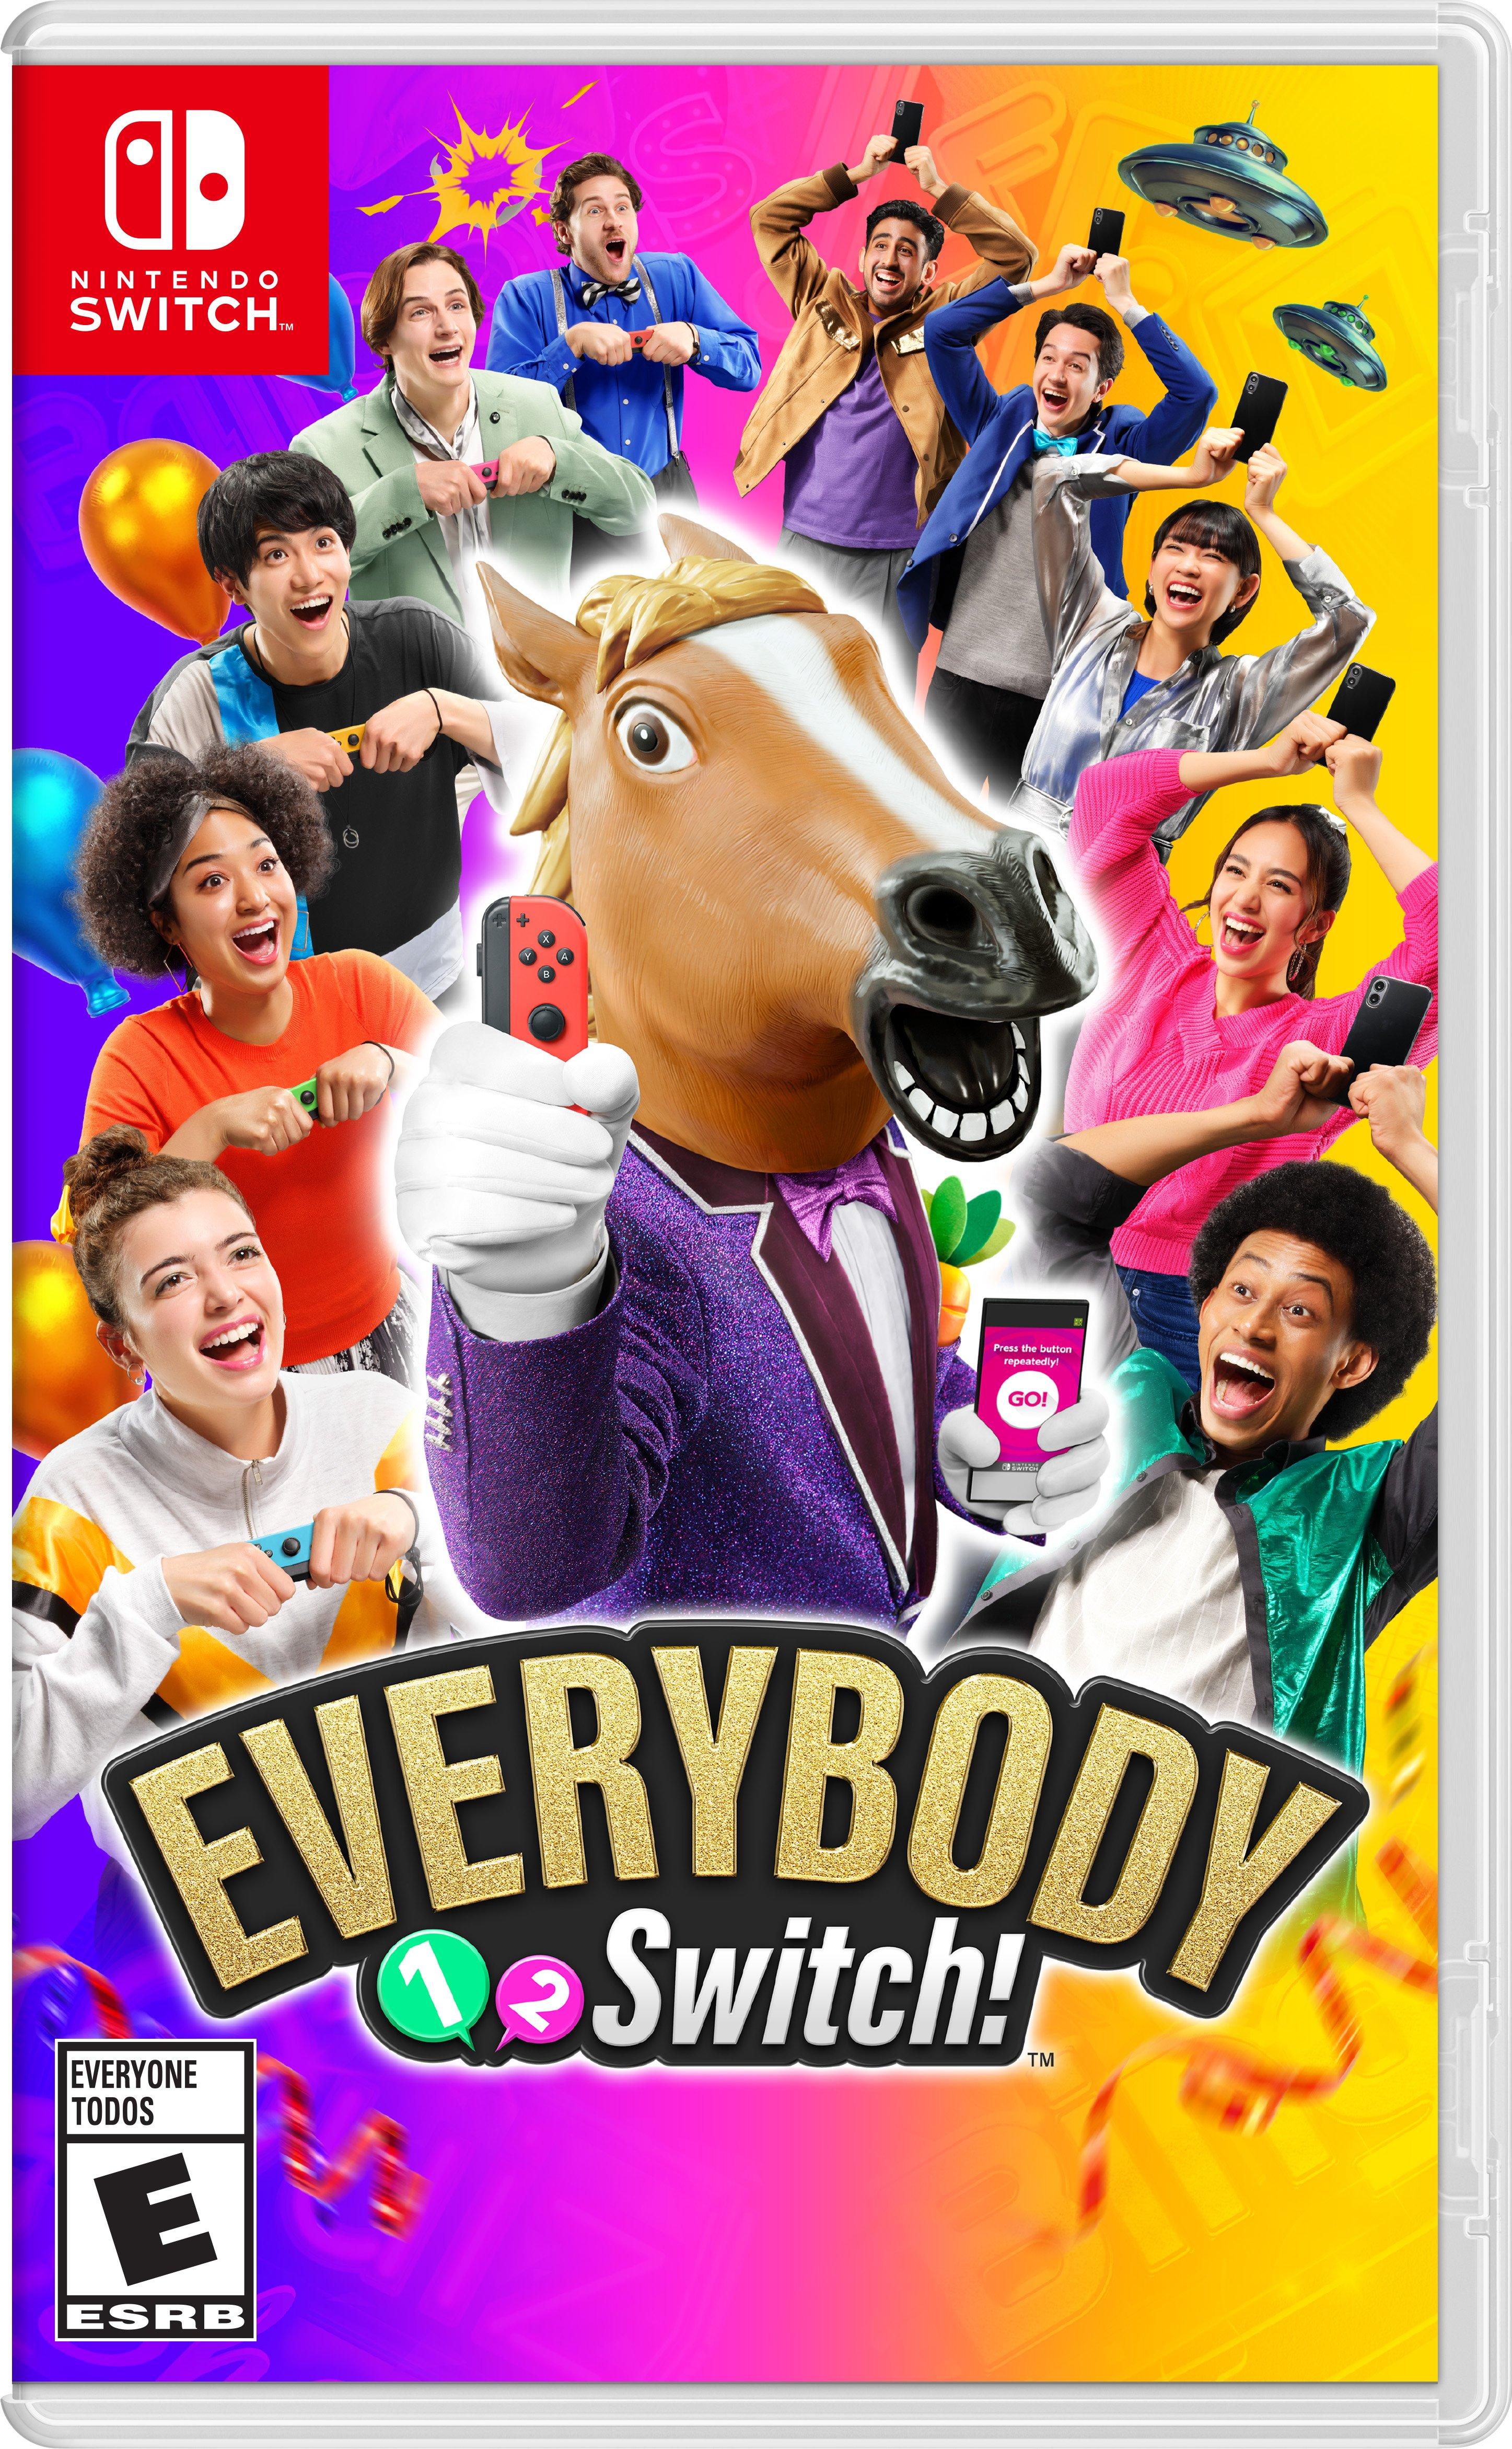 Everybody 1-2 Switch! - Nintendo Switch | Nintendo Switch | GameStop